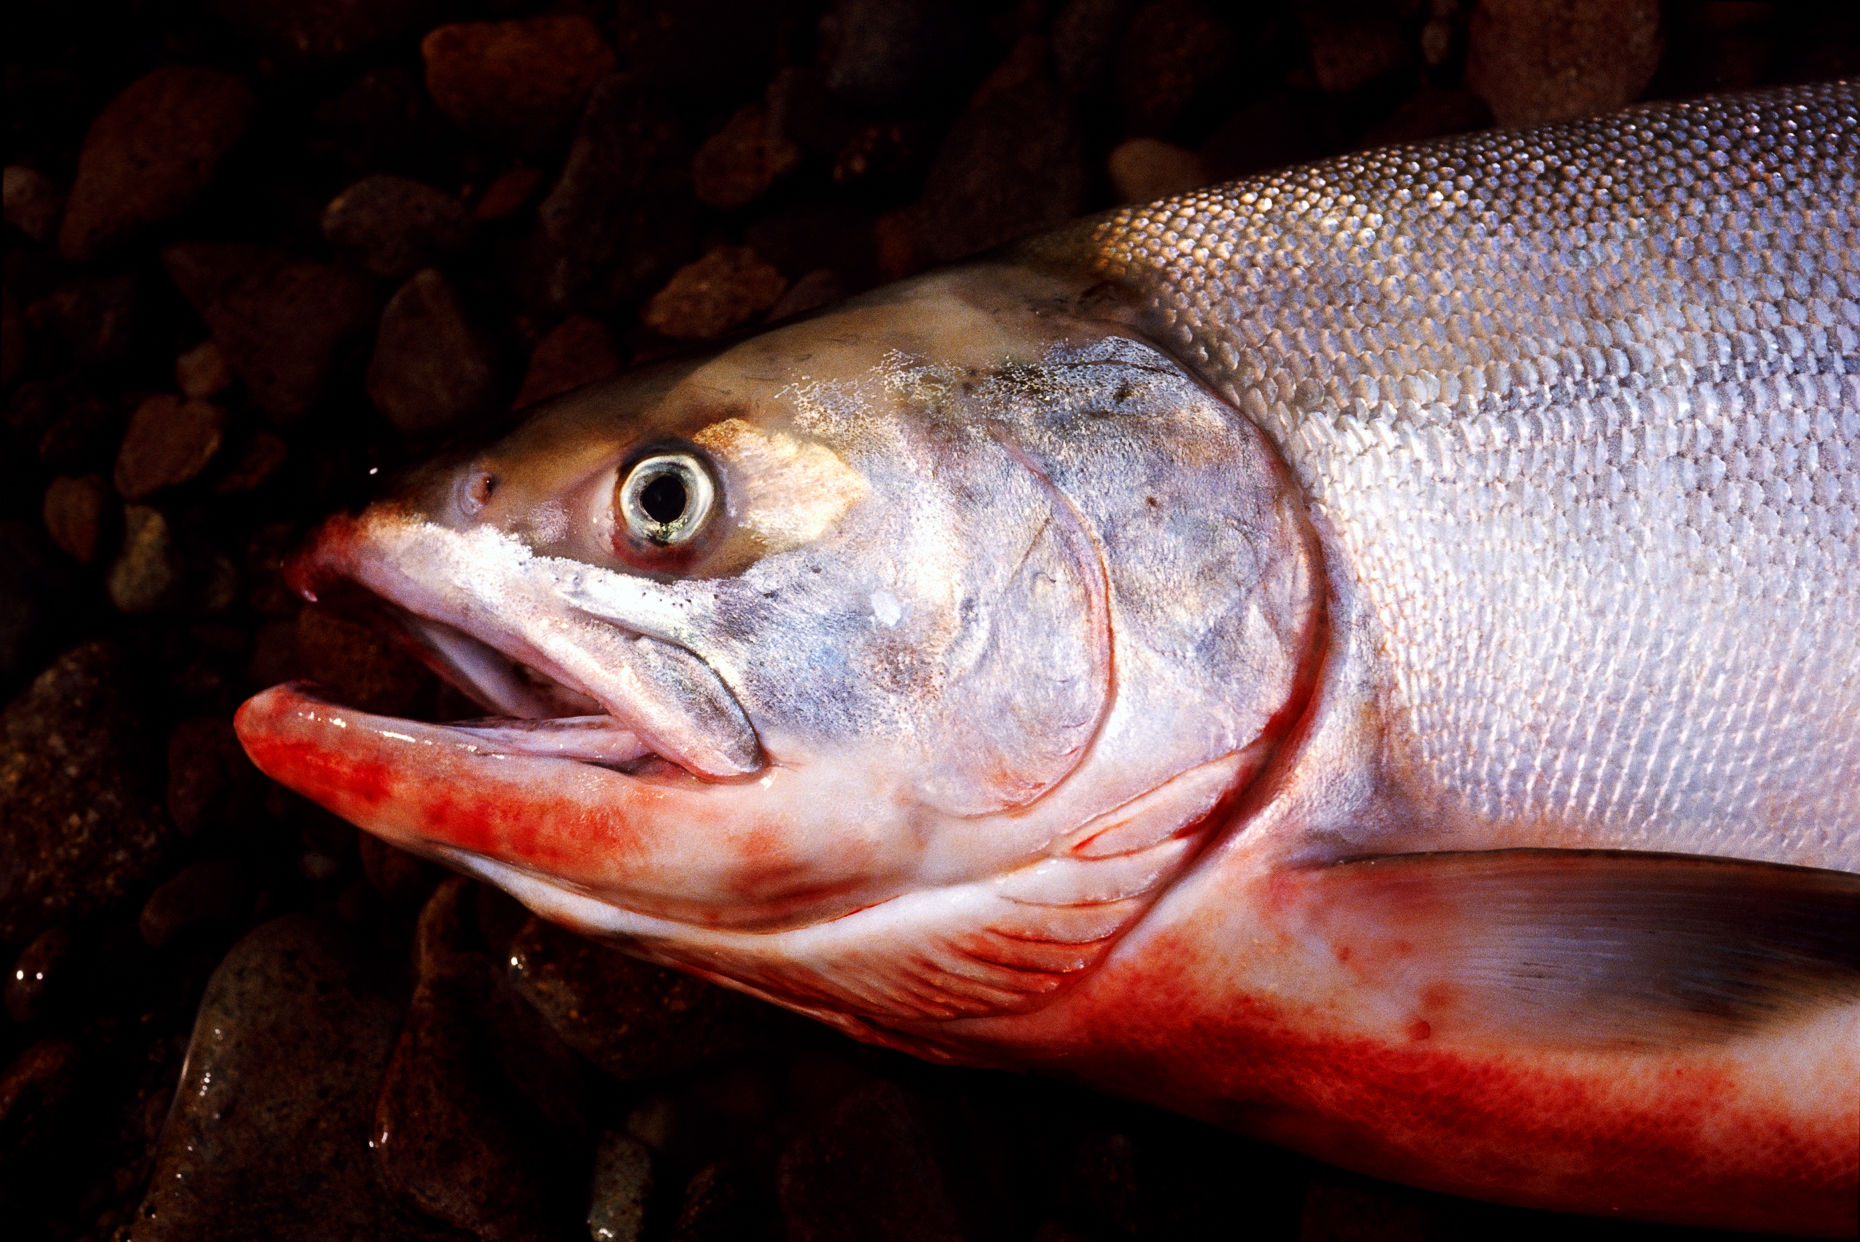 Close up of a freshly caught salmon, Belaya River, Chukchi Peninsula, Magadon Region, Siberia, former Soviet Union